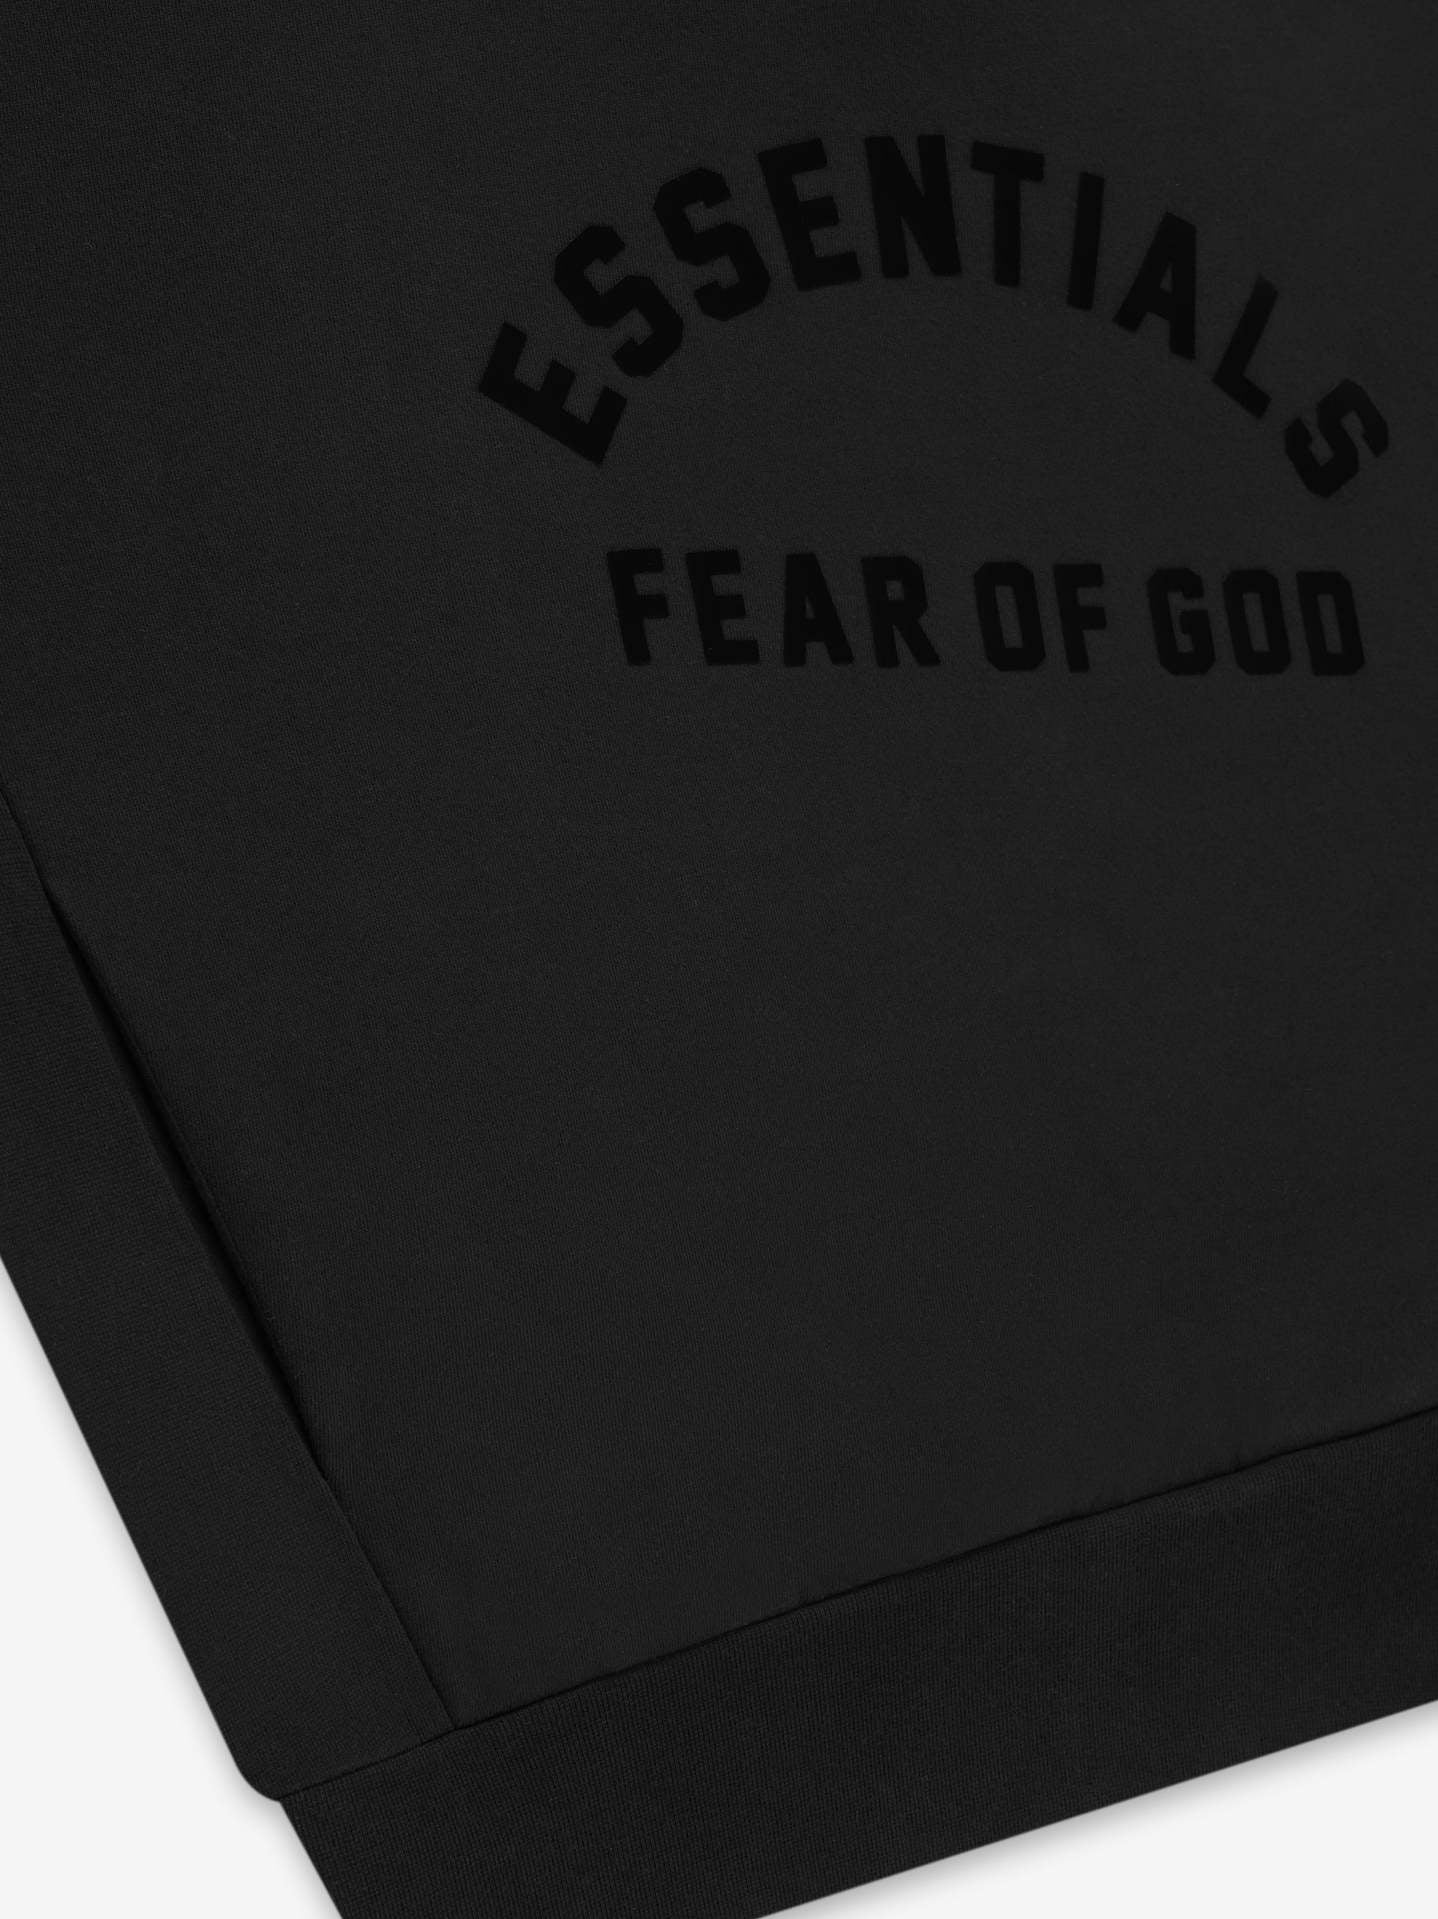 Fear of God Essentials Hoodie